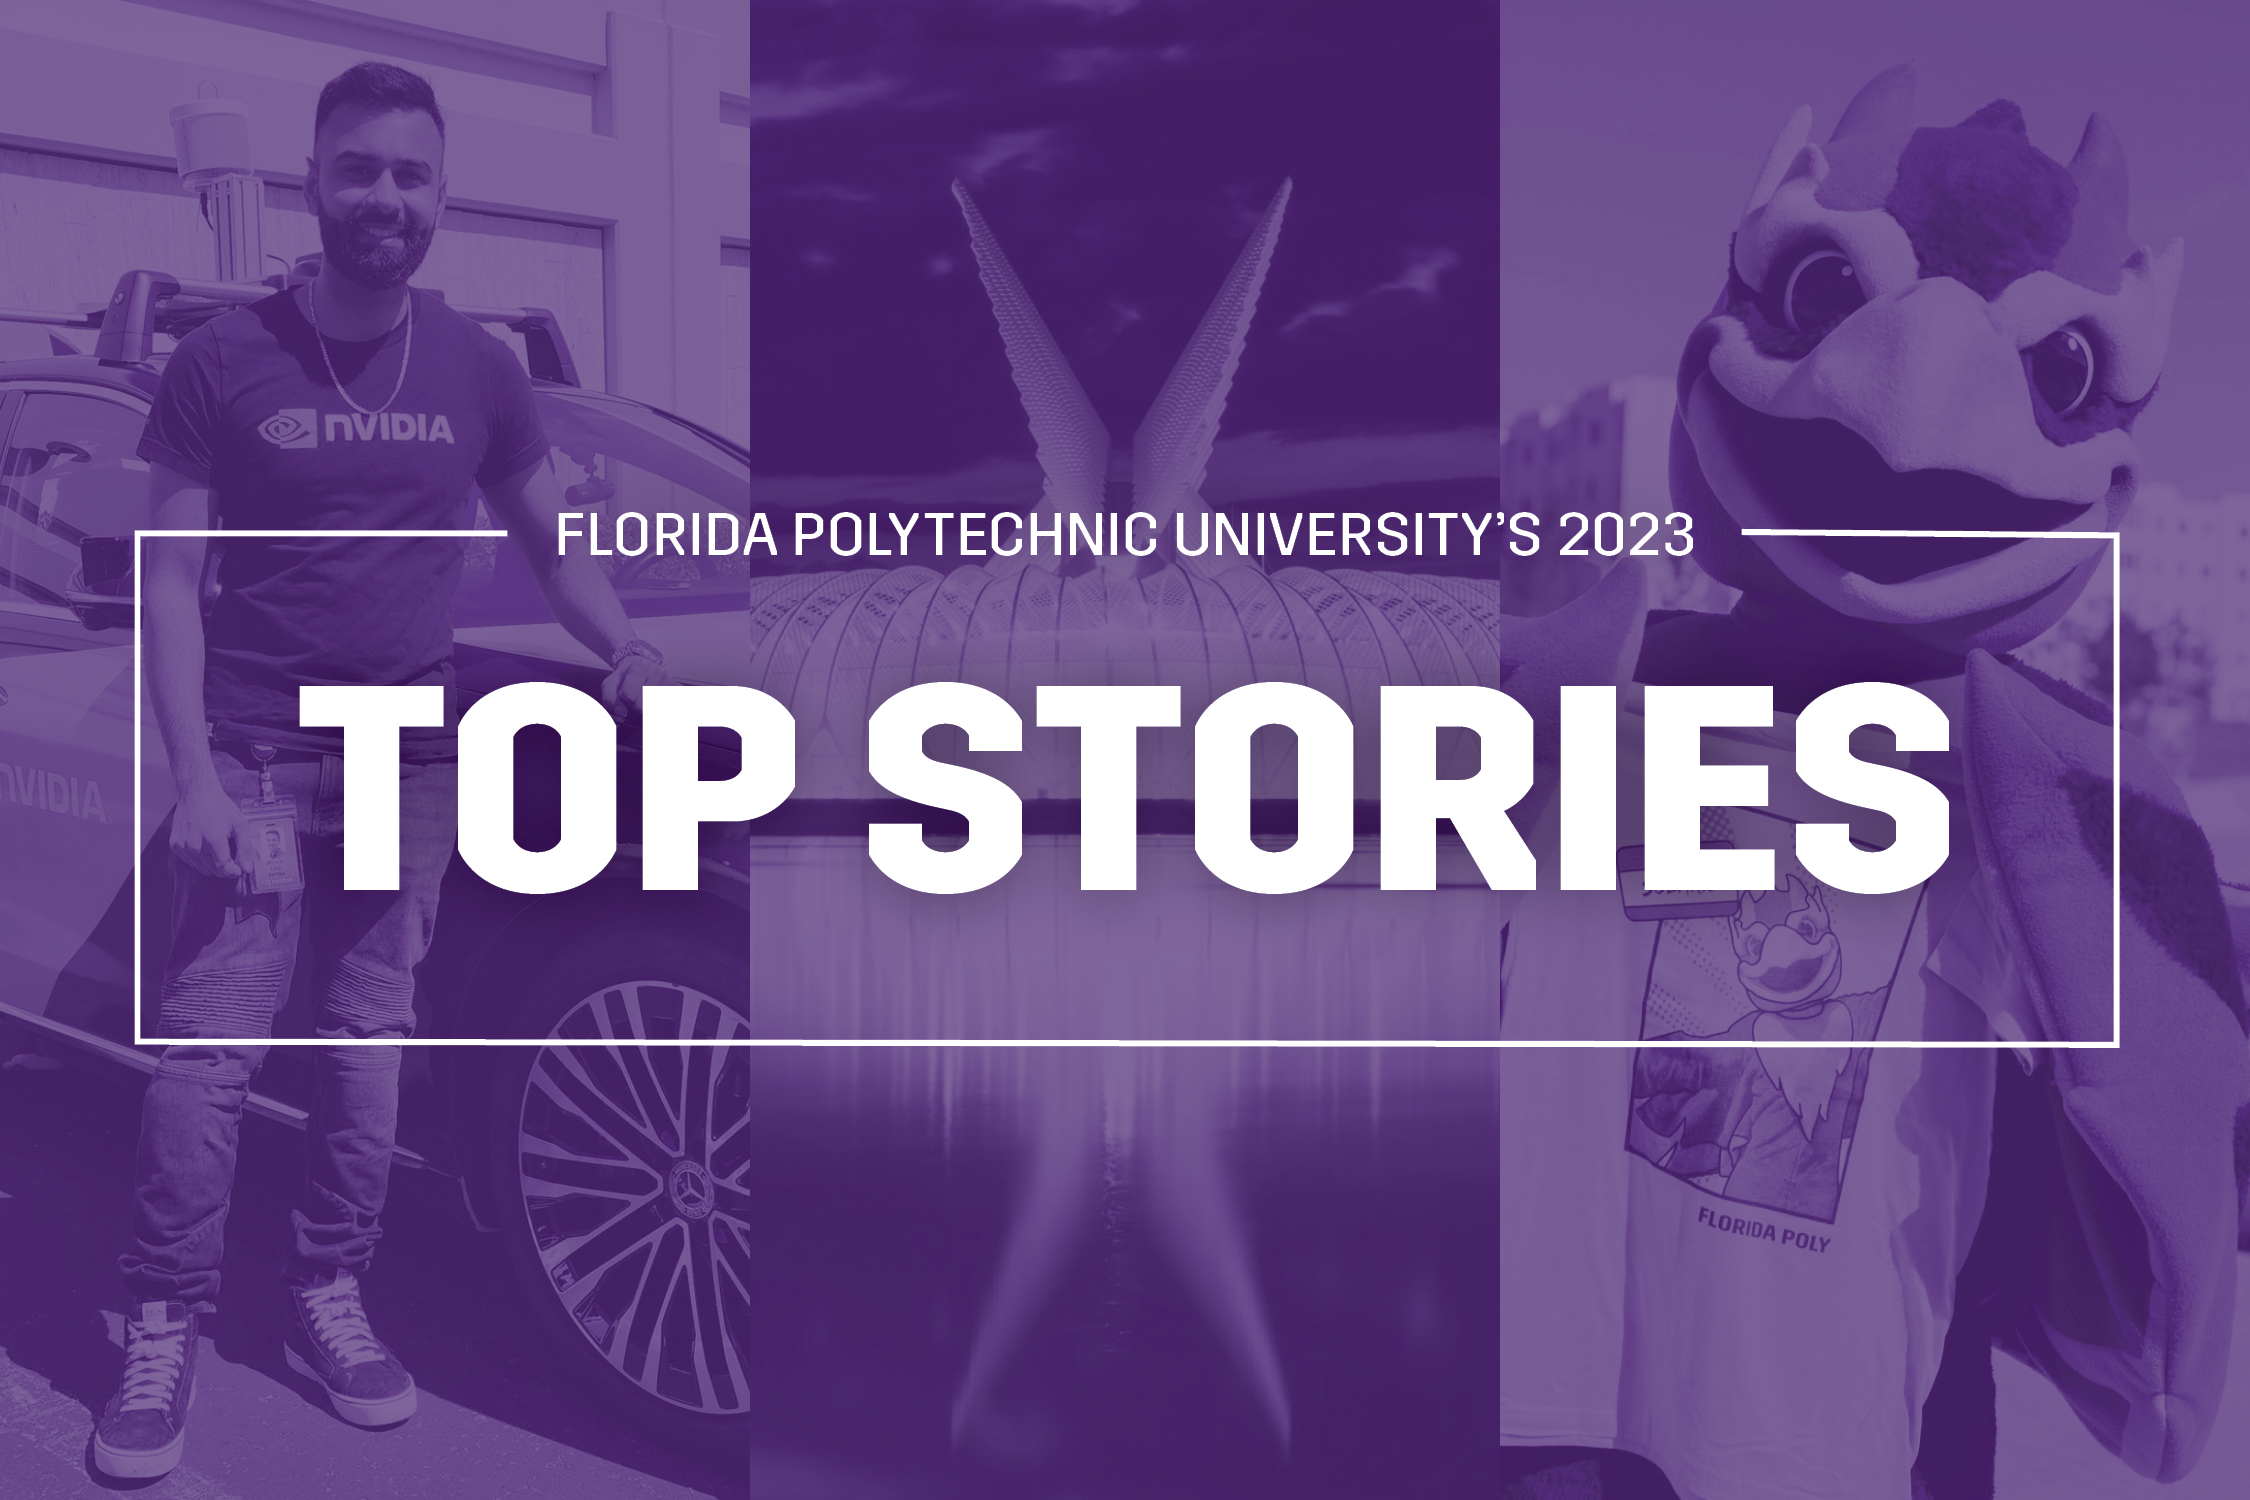 Florida Poly's top stories of 2023